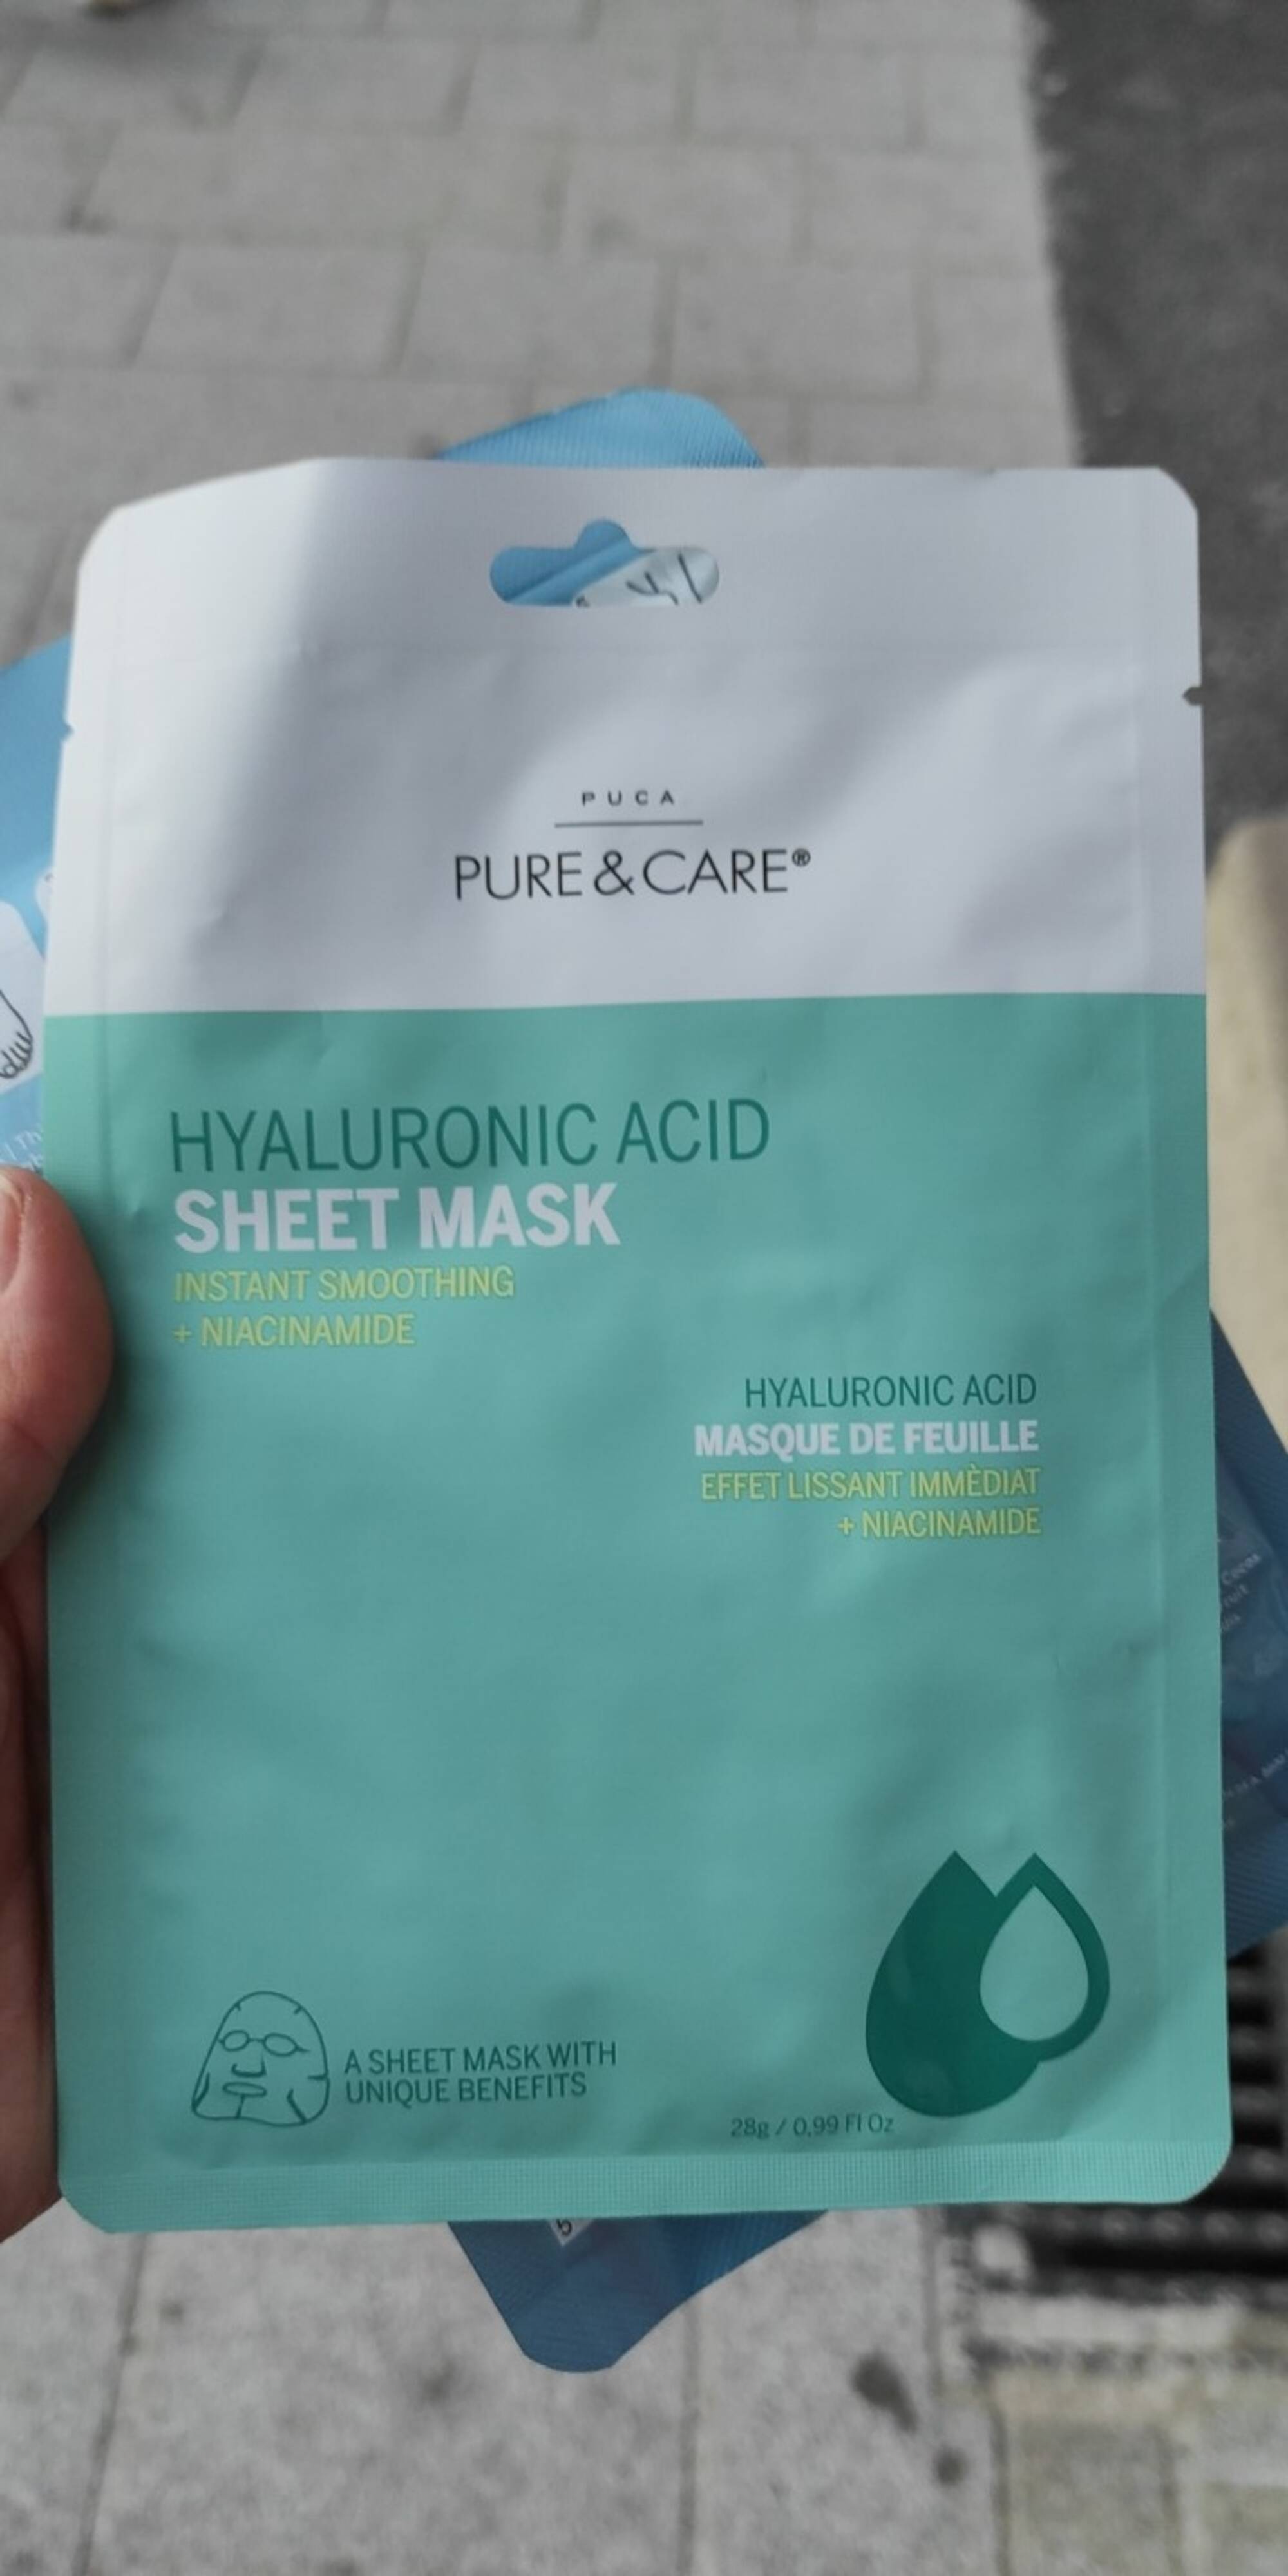 PURE & CARE - Puca Hyaluronic acid - Masque de feuille